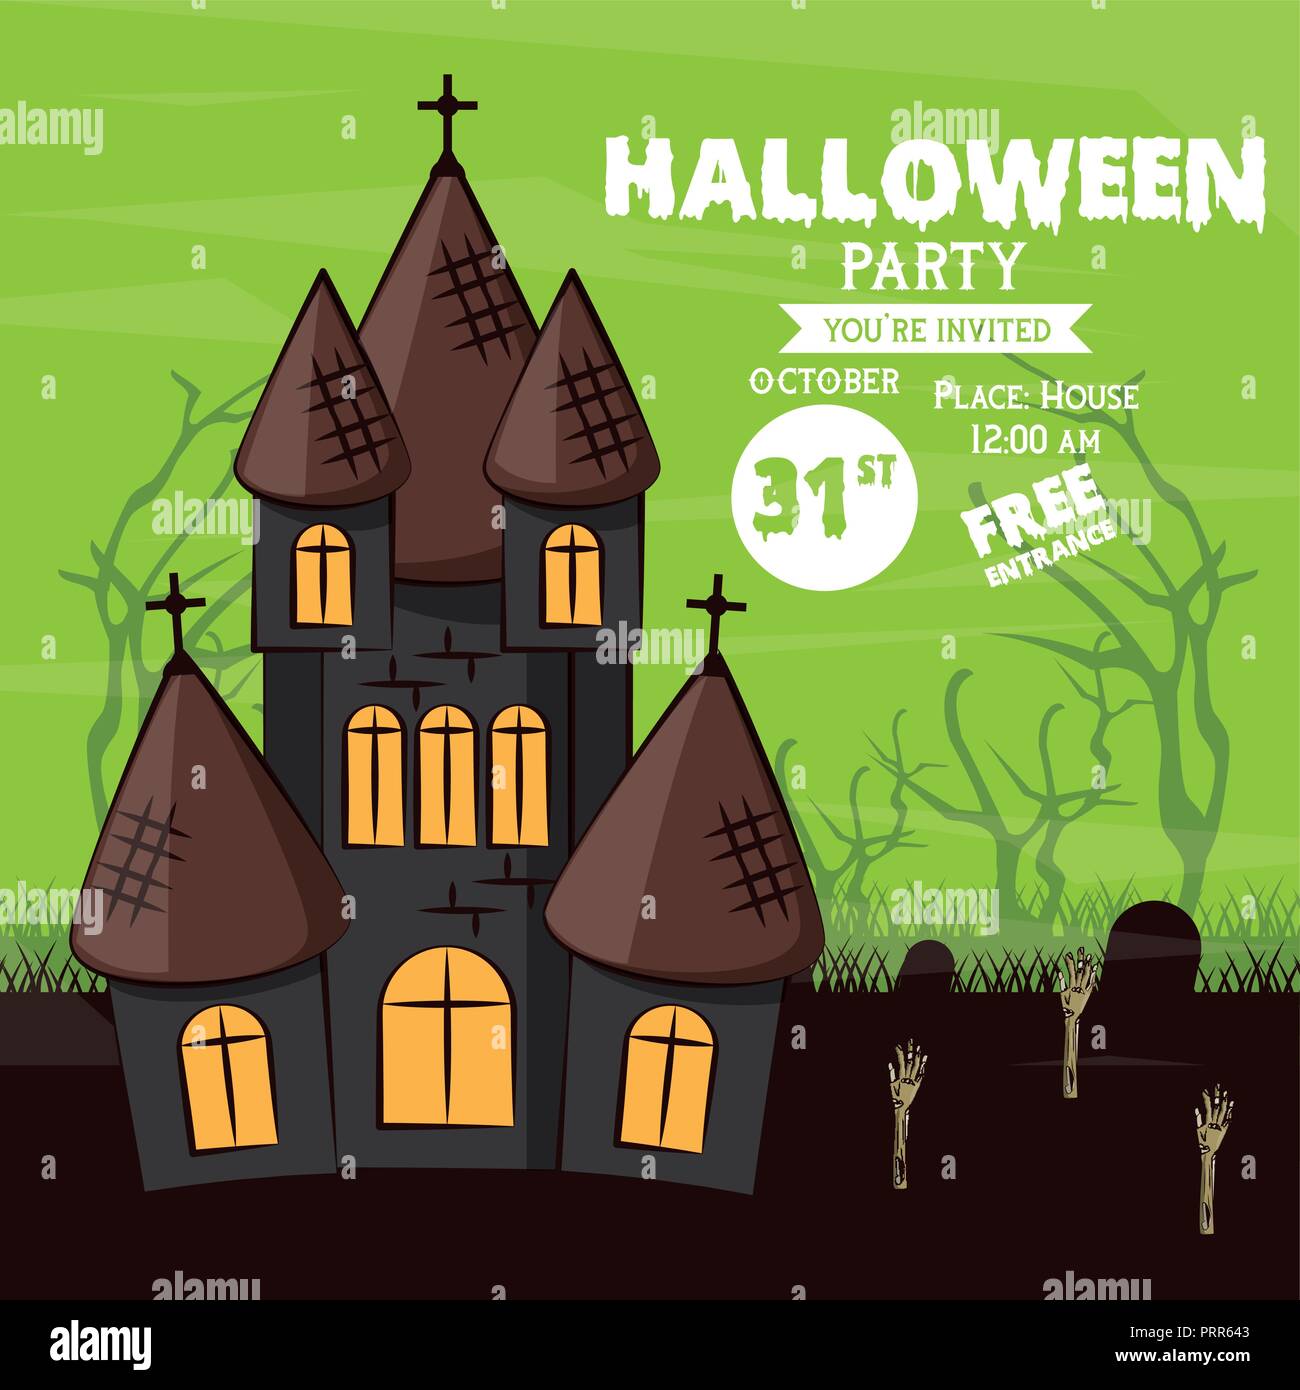 Halloween party invitation card Stock Vector